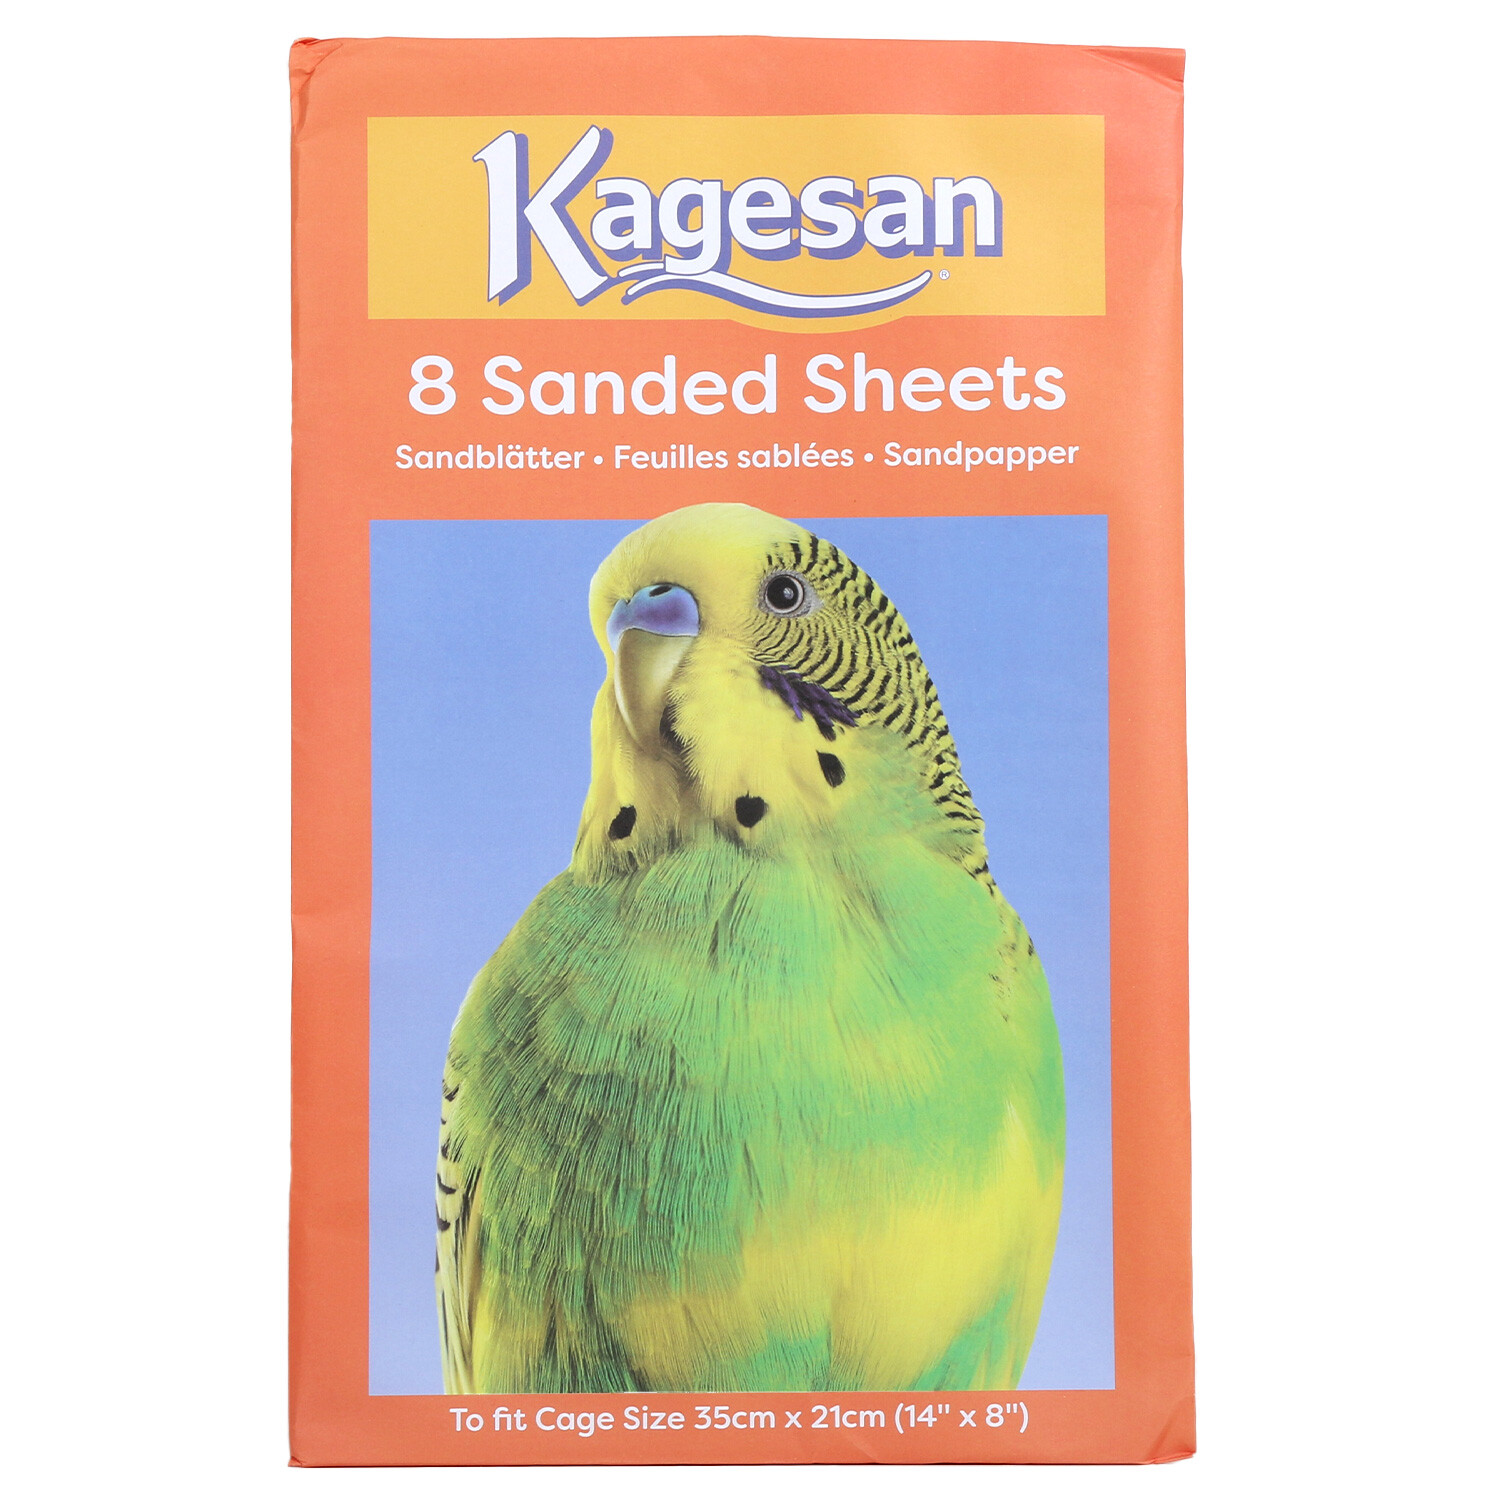 Kagesan Sanded Sheets 8 Pack Image